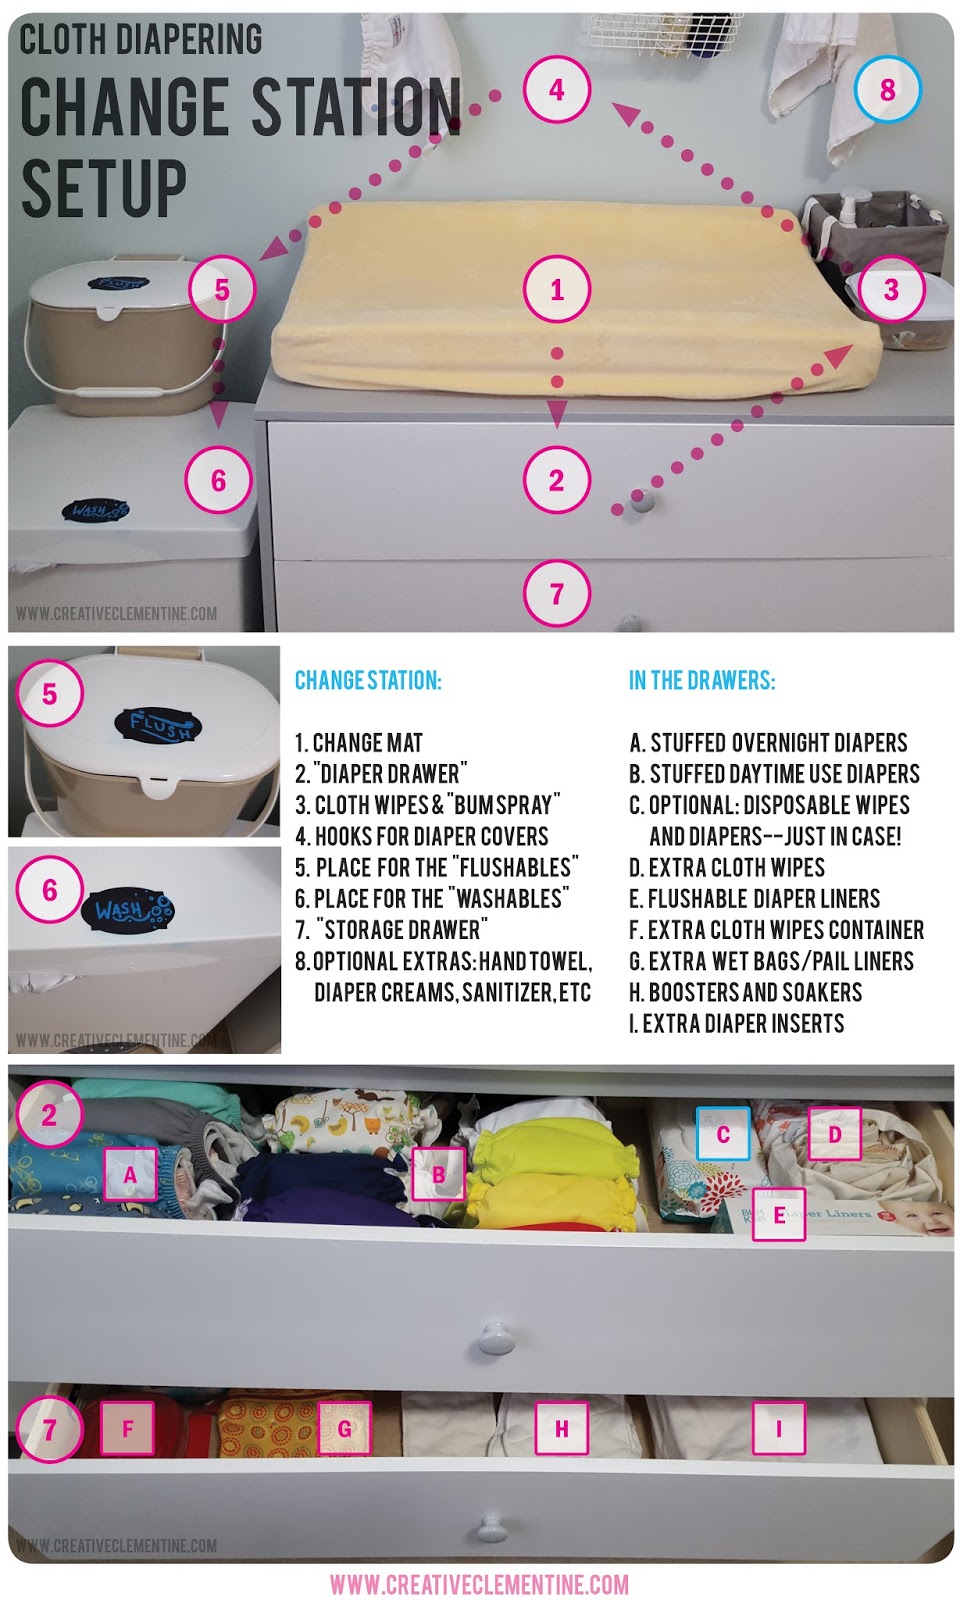 Cloth diaper change station setup via www.creativeclementine.com